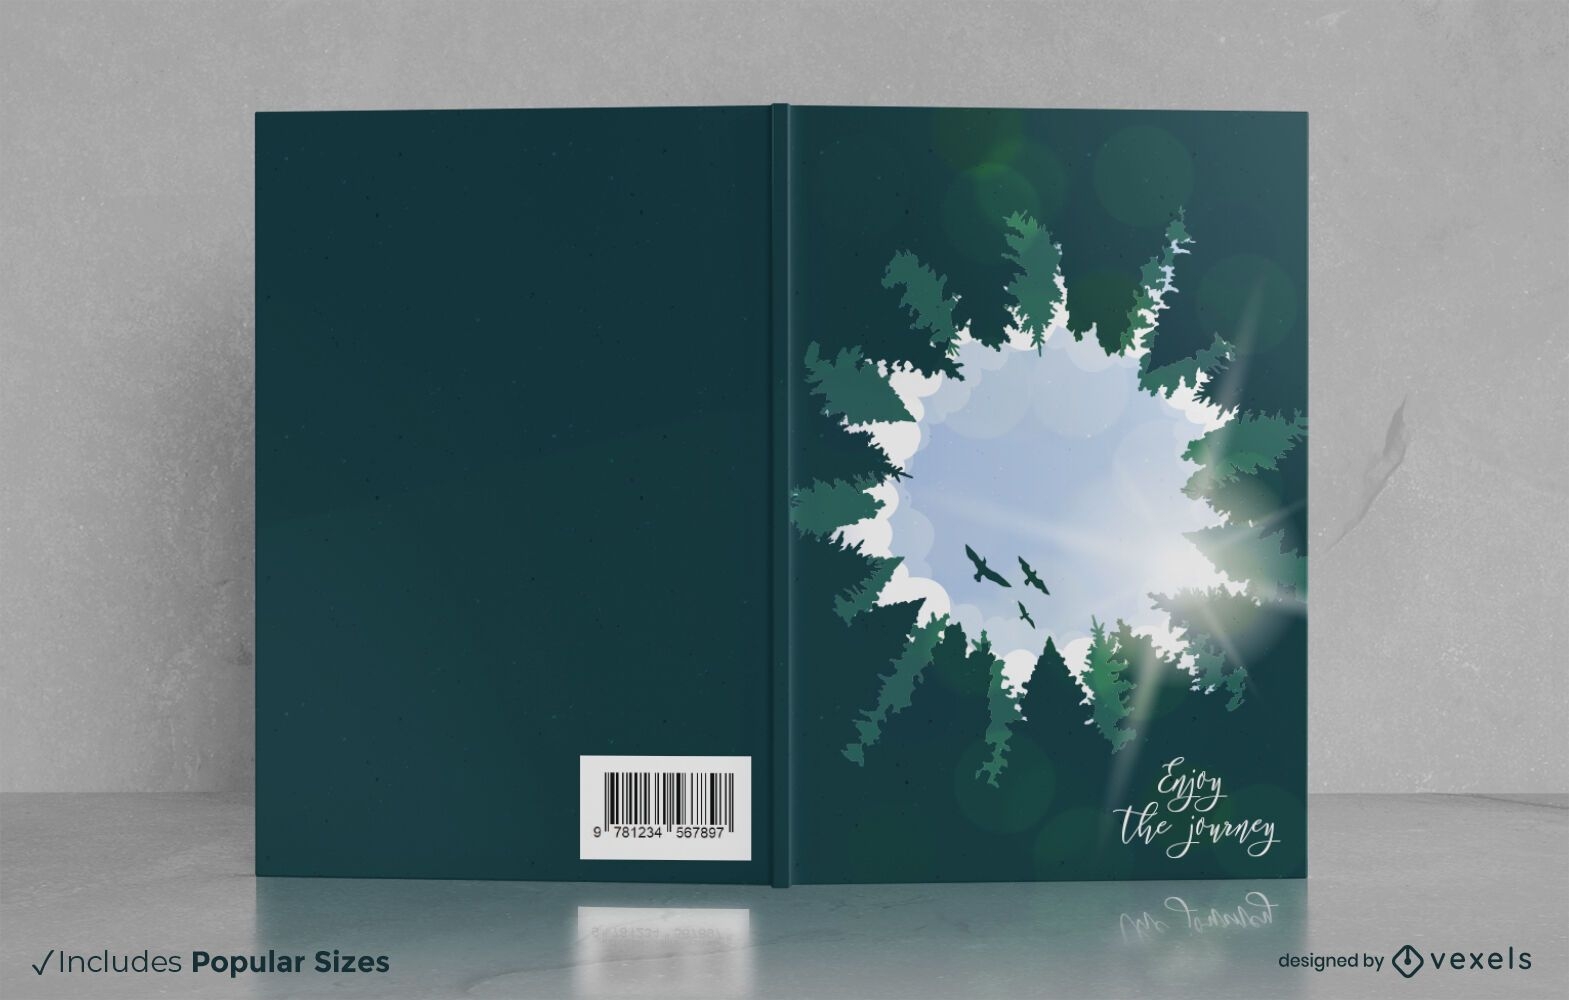 Enjoy the journey book cover design